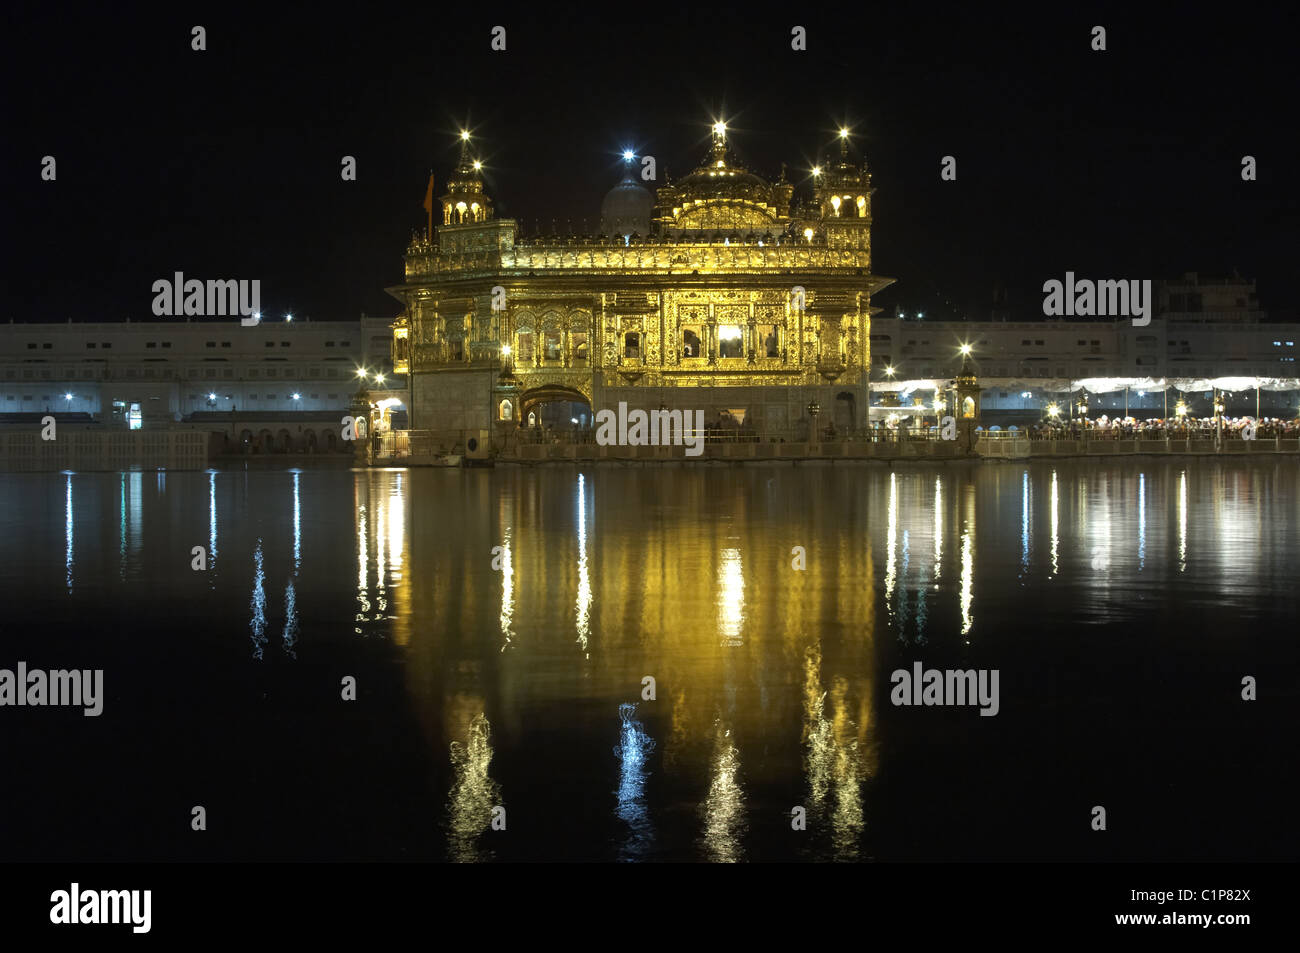 The Golden Temple, Amritsar, at night. Stock Photo